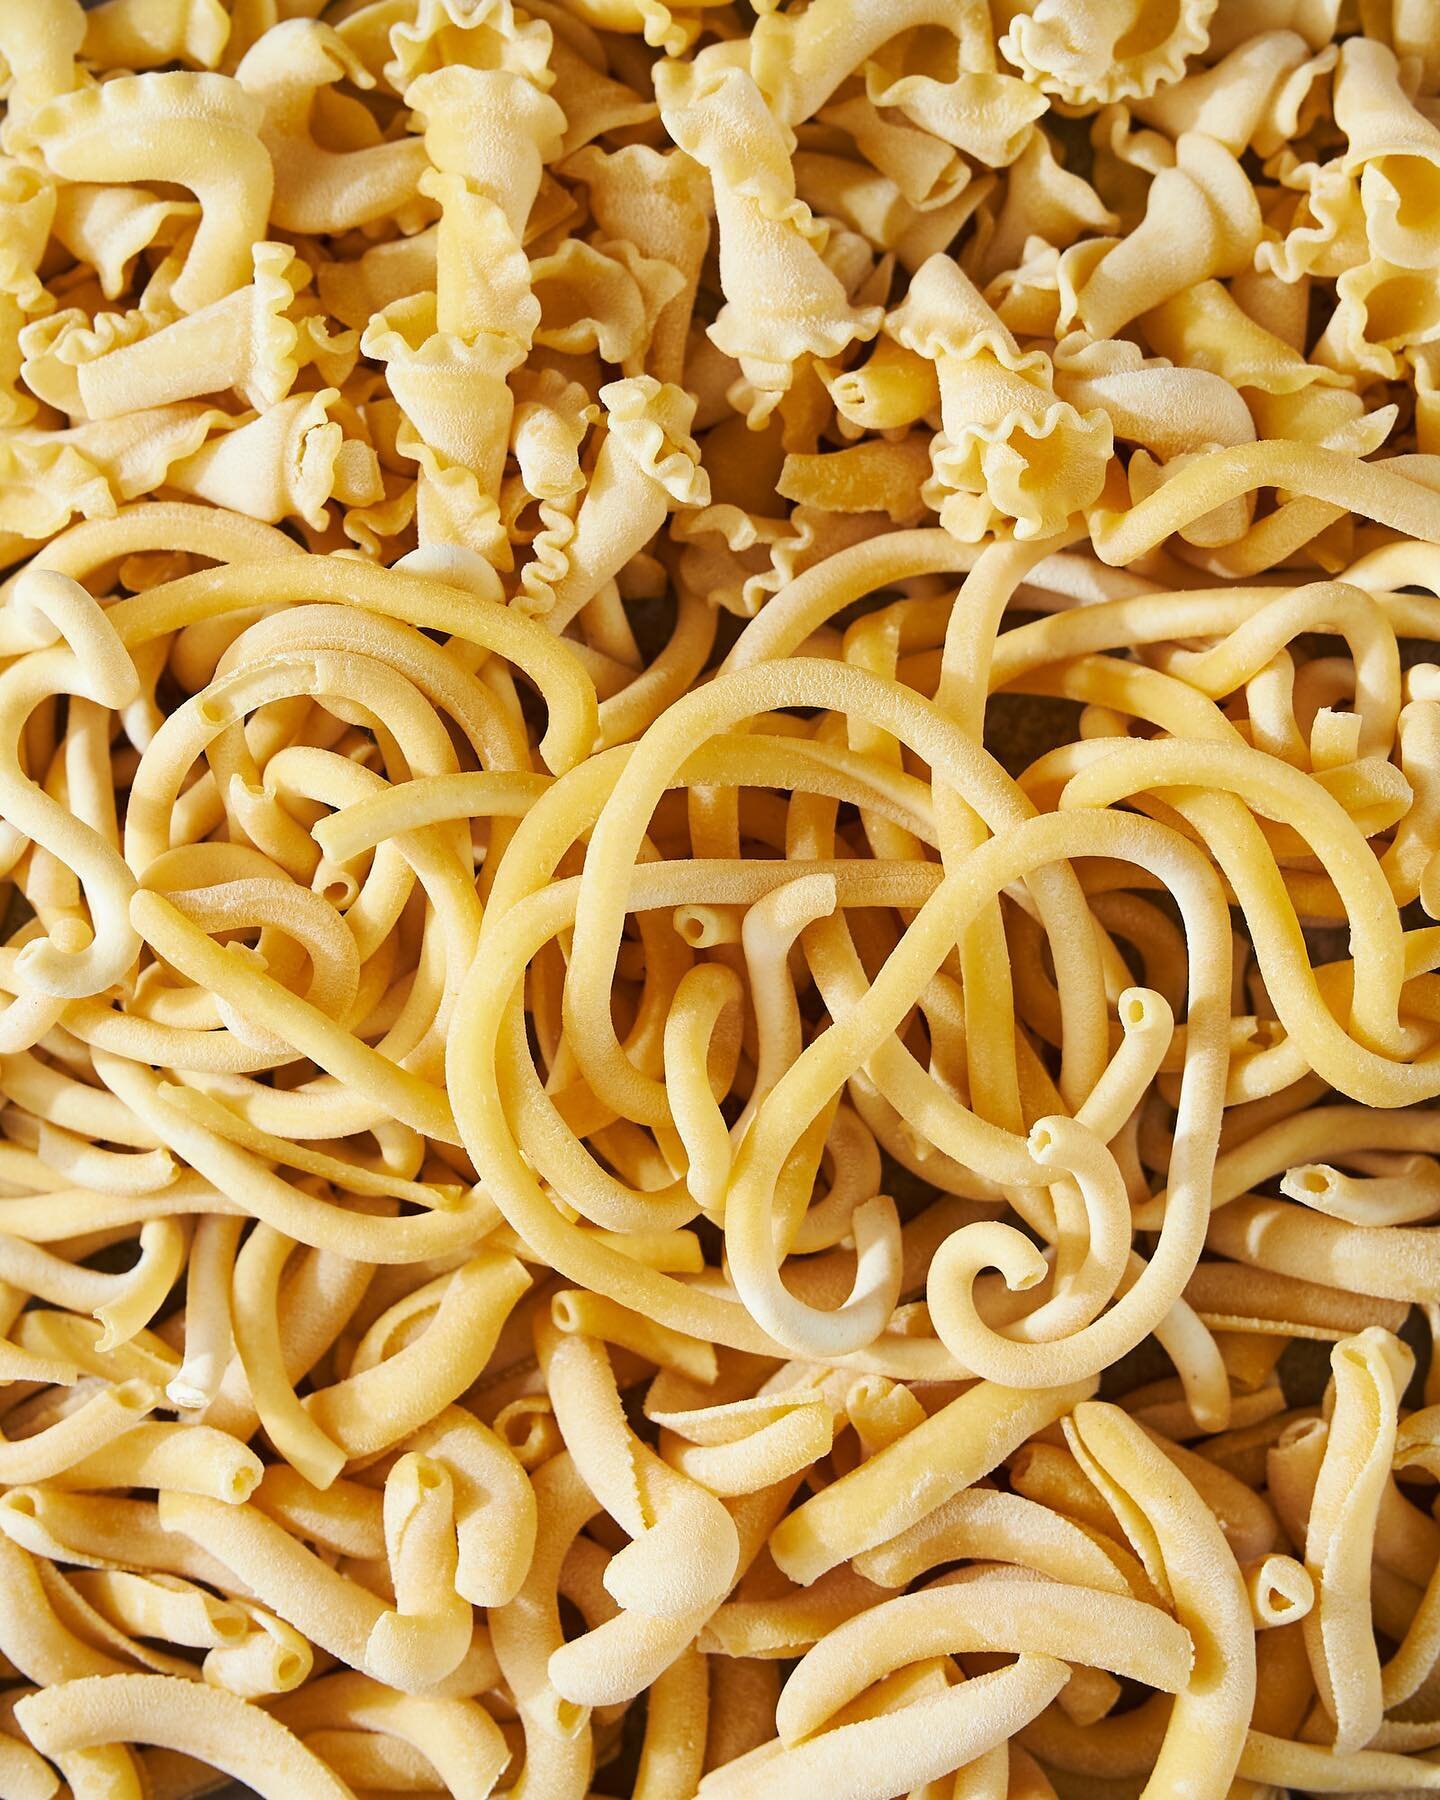 PSA: MIDA sells their fresh handmade pasta to-go. GET IT!